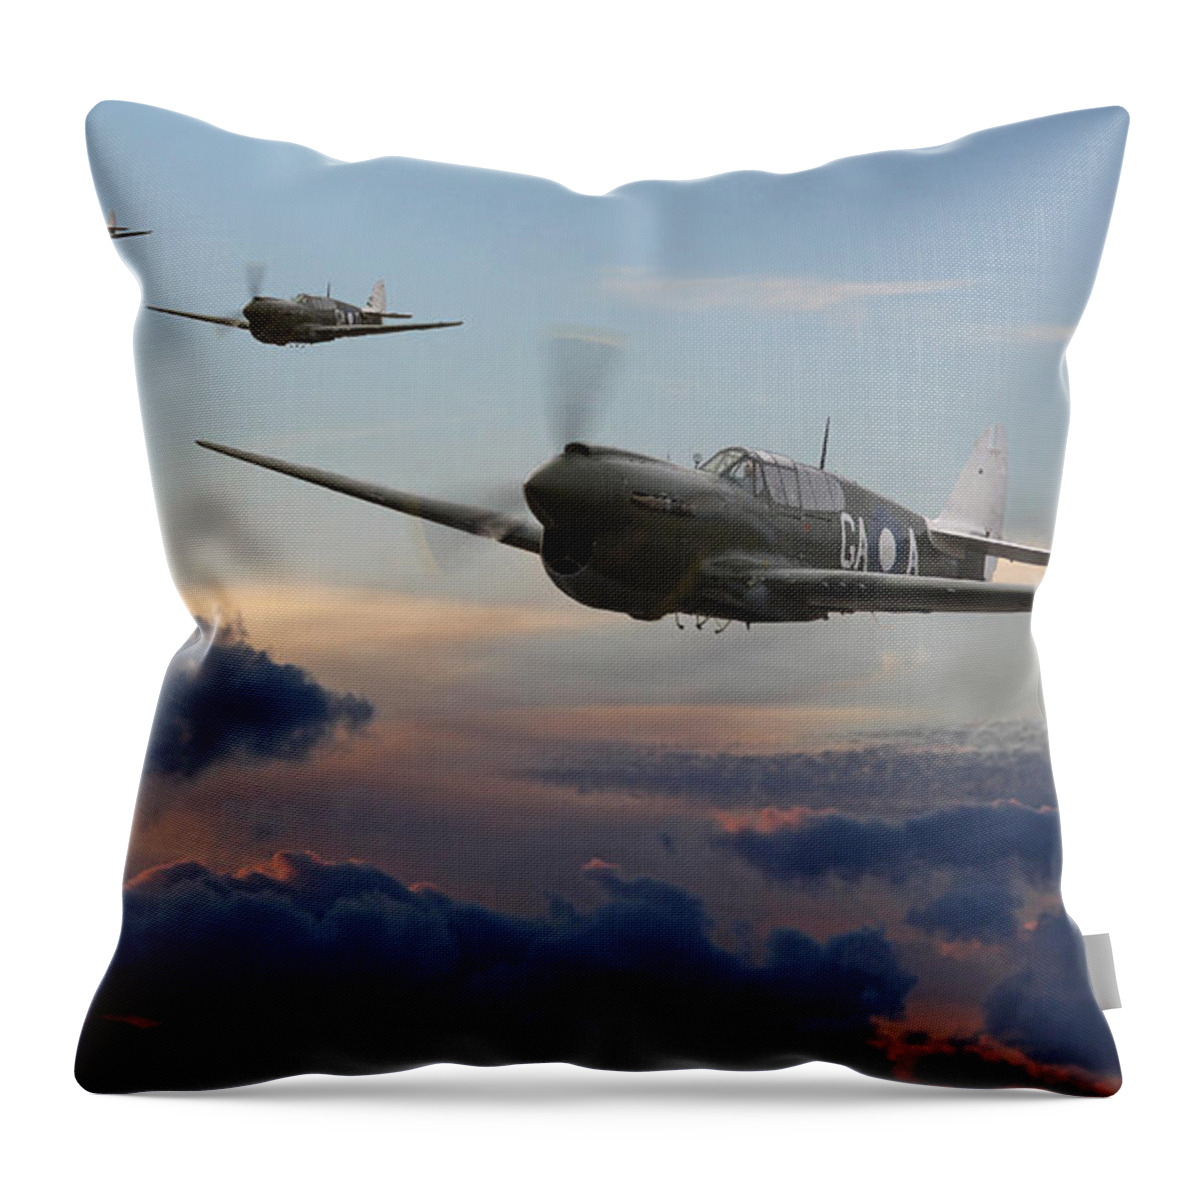 Raaf Throw Pillow featuring the digital art Pacific Warhorse - RAAF Version by Mark Donoghue